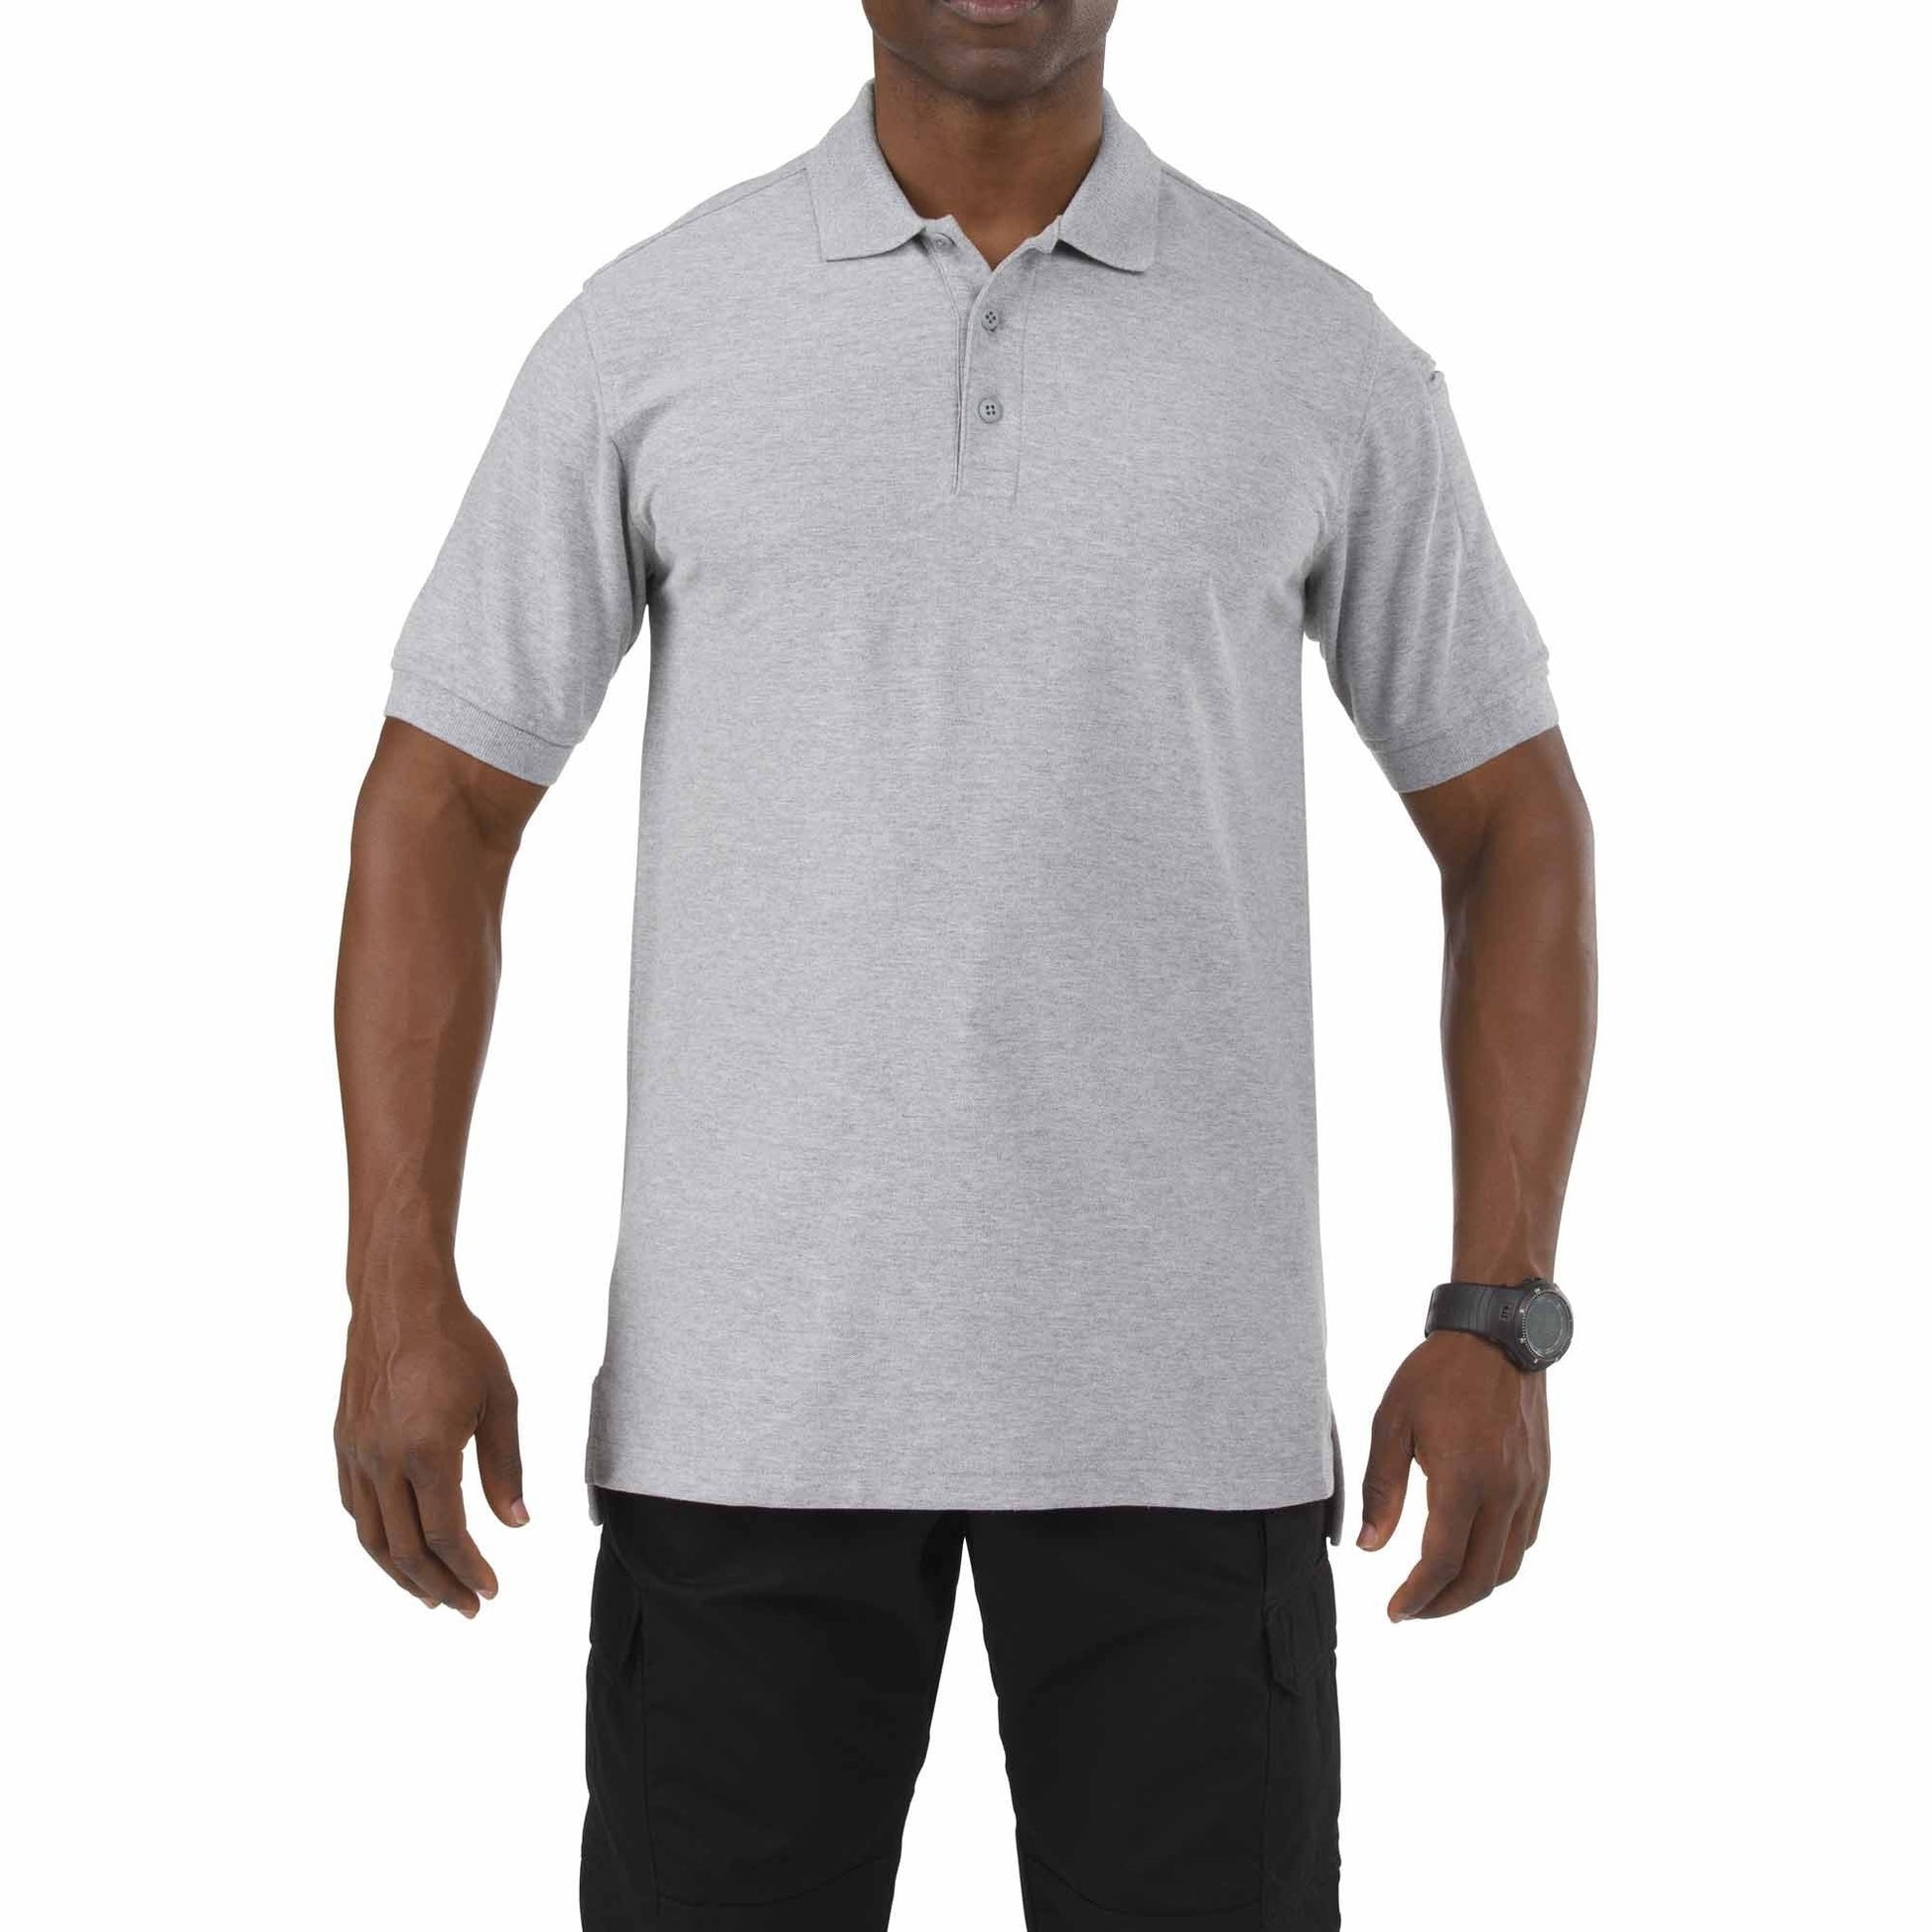 5.11 Tactical Professional Short Sleeve Polo Shirt Heather Grey Tactical Distributors Ltd New Zealand